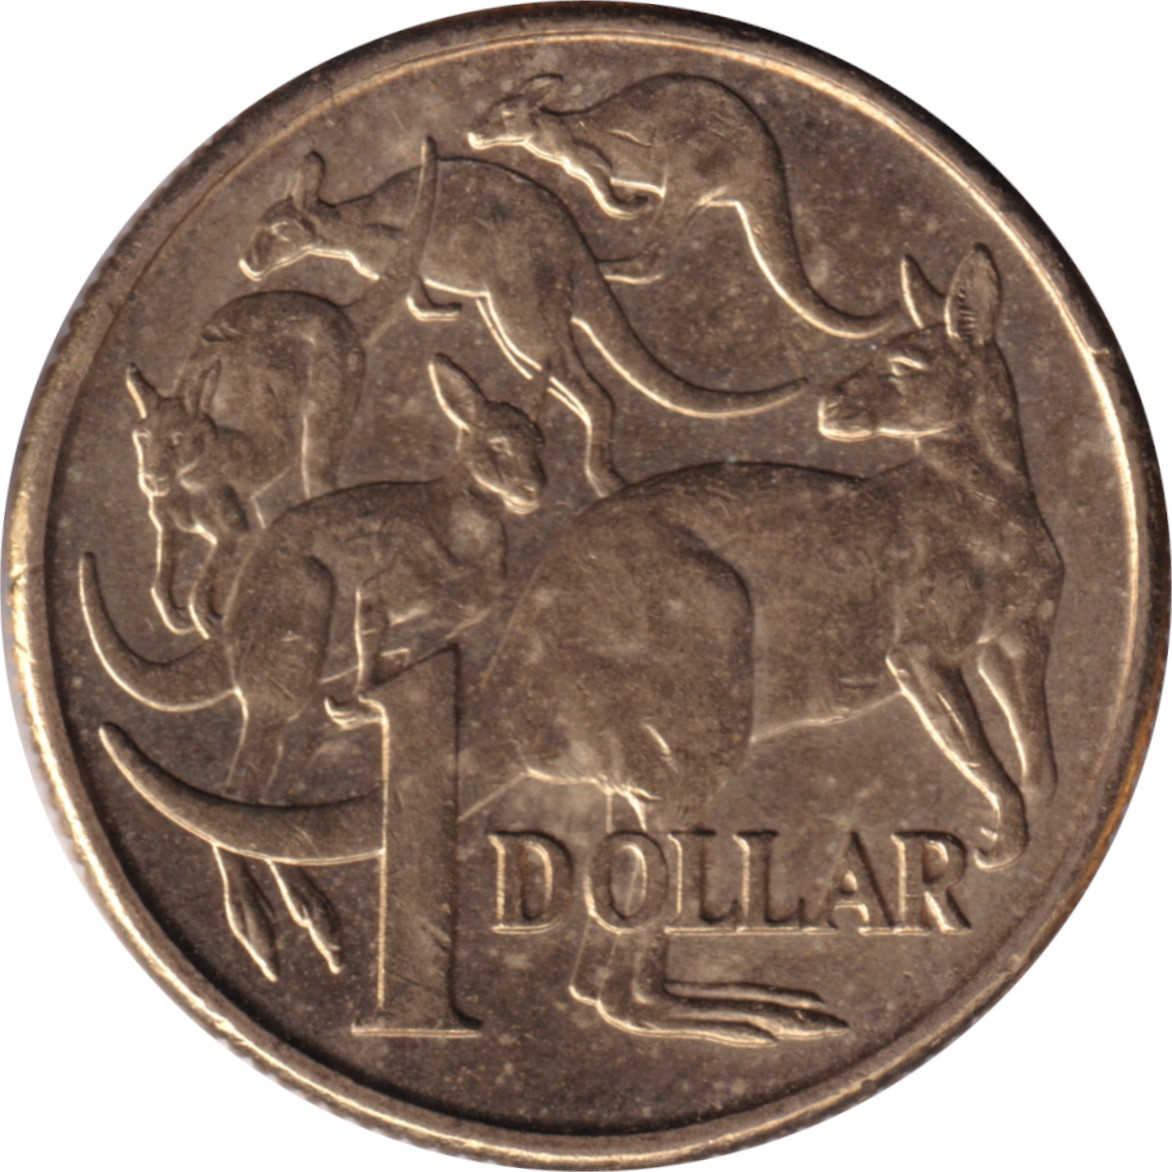 1 dollar - Elizabeth II - Old head